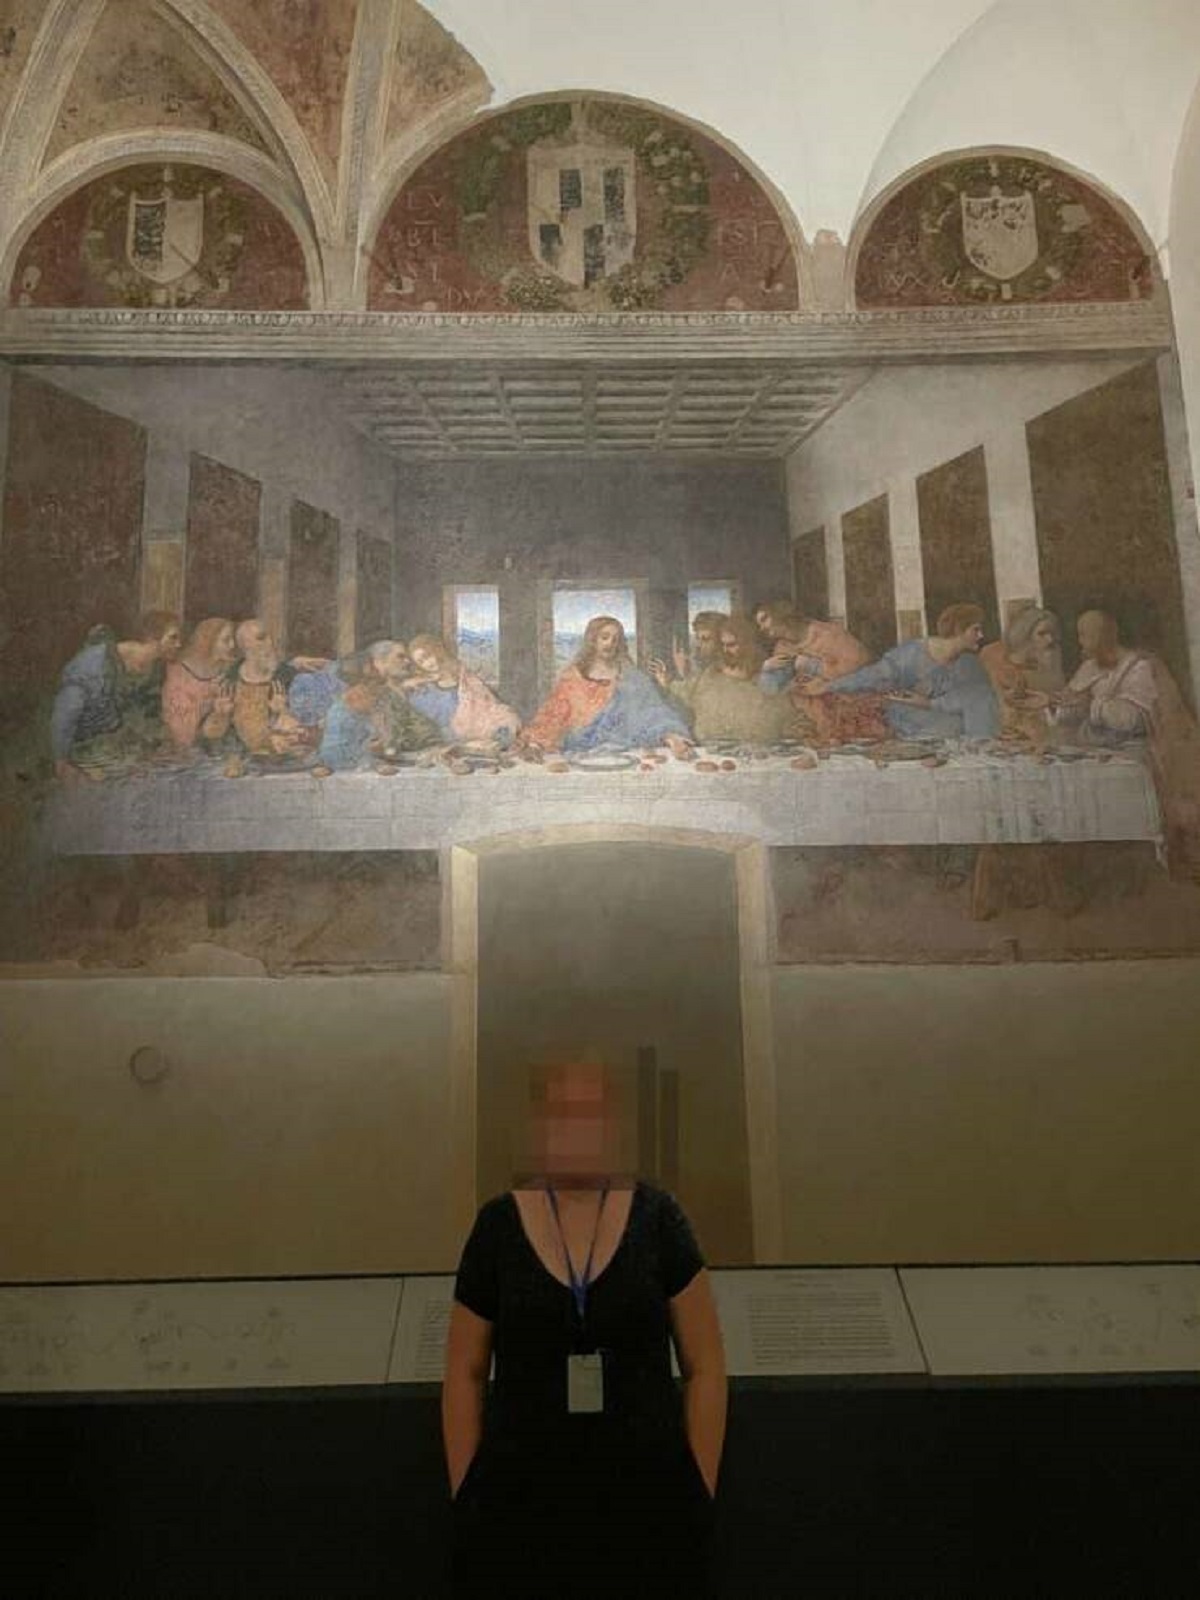 Da Vinci's "The Last Supper" is pretty dang big: